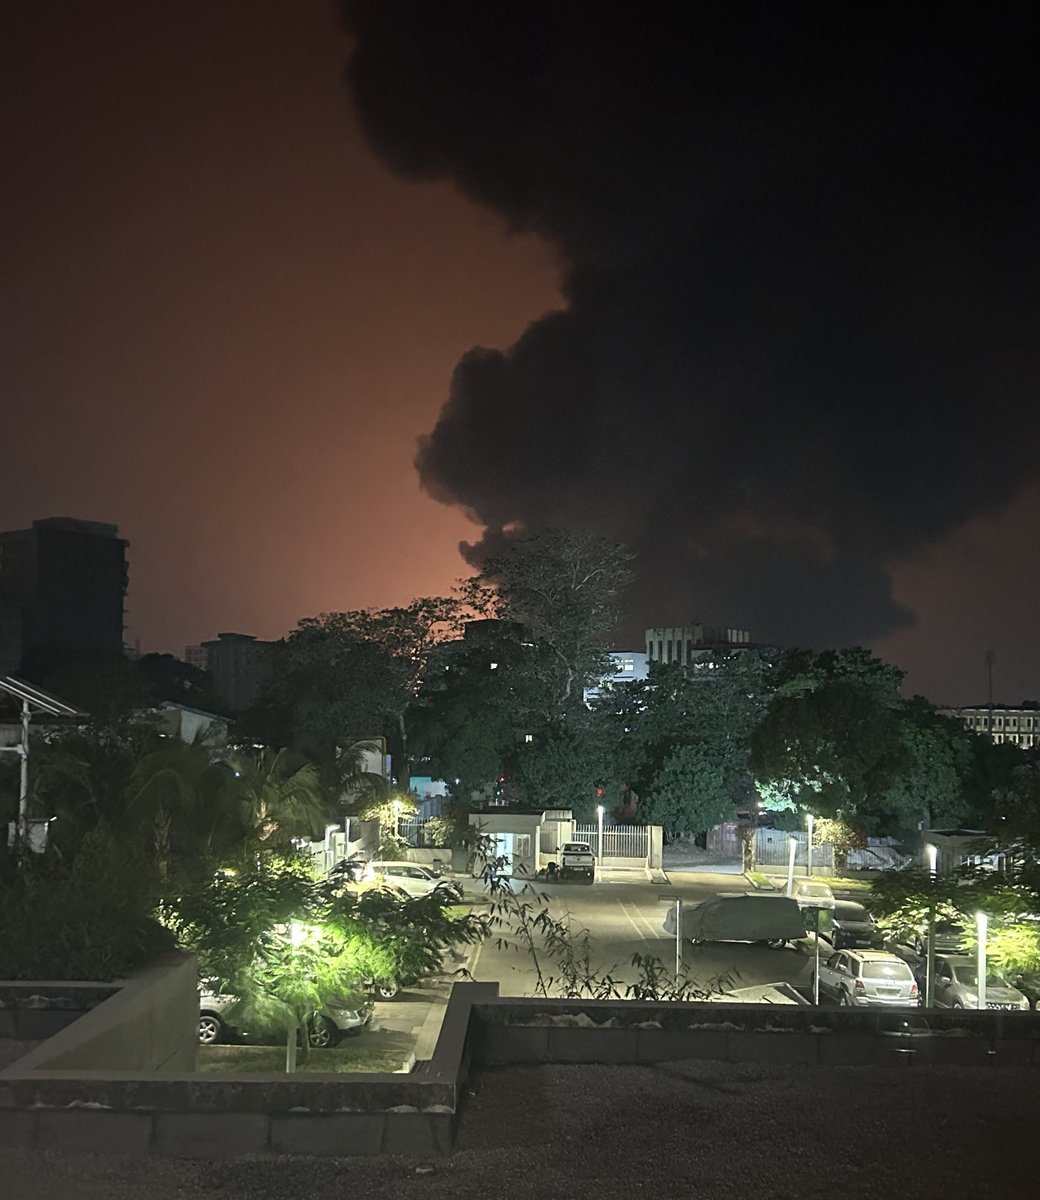 Still burning in Kaloum nearly 23 hours later bbc.com/news/world-afr…